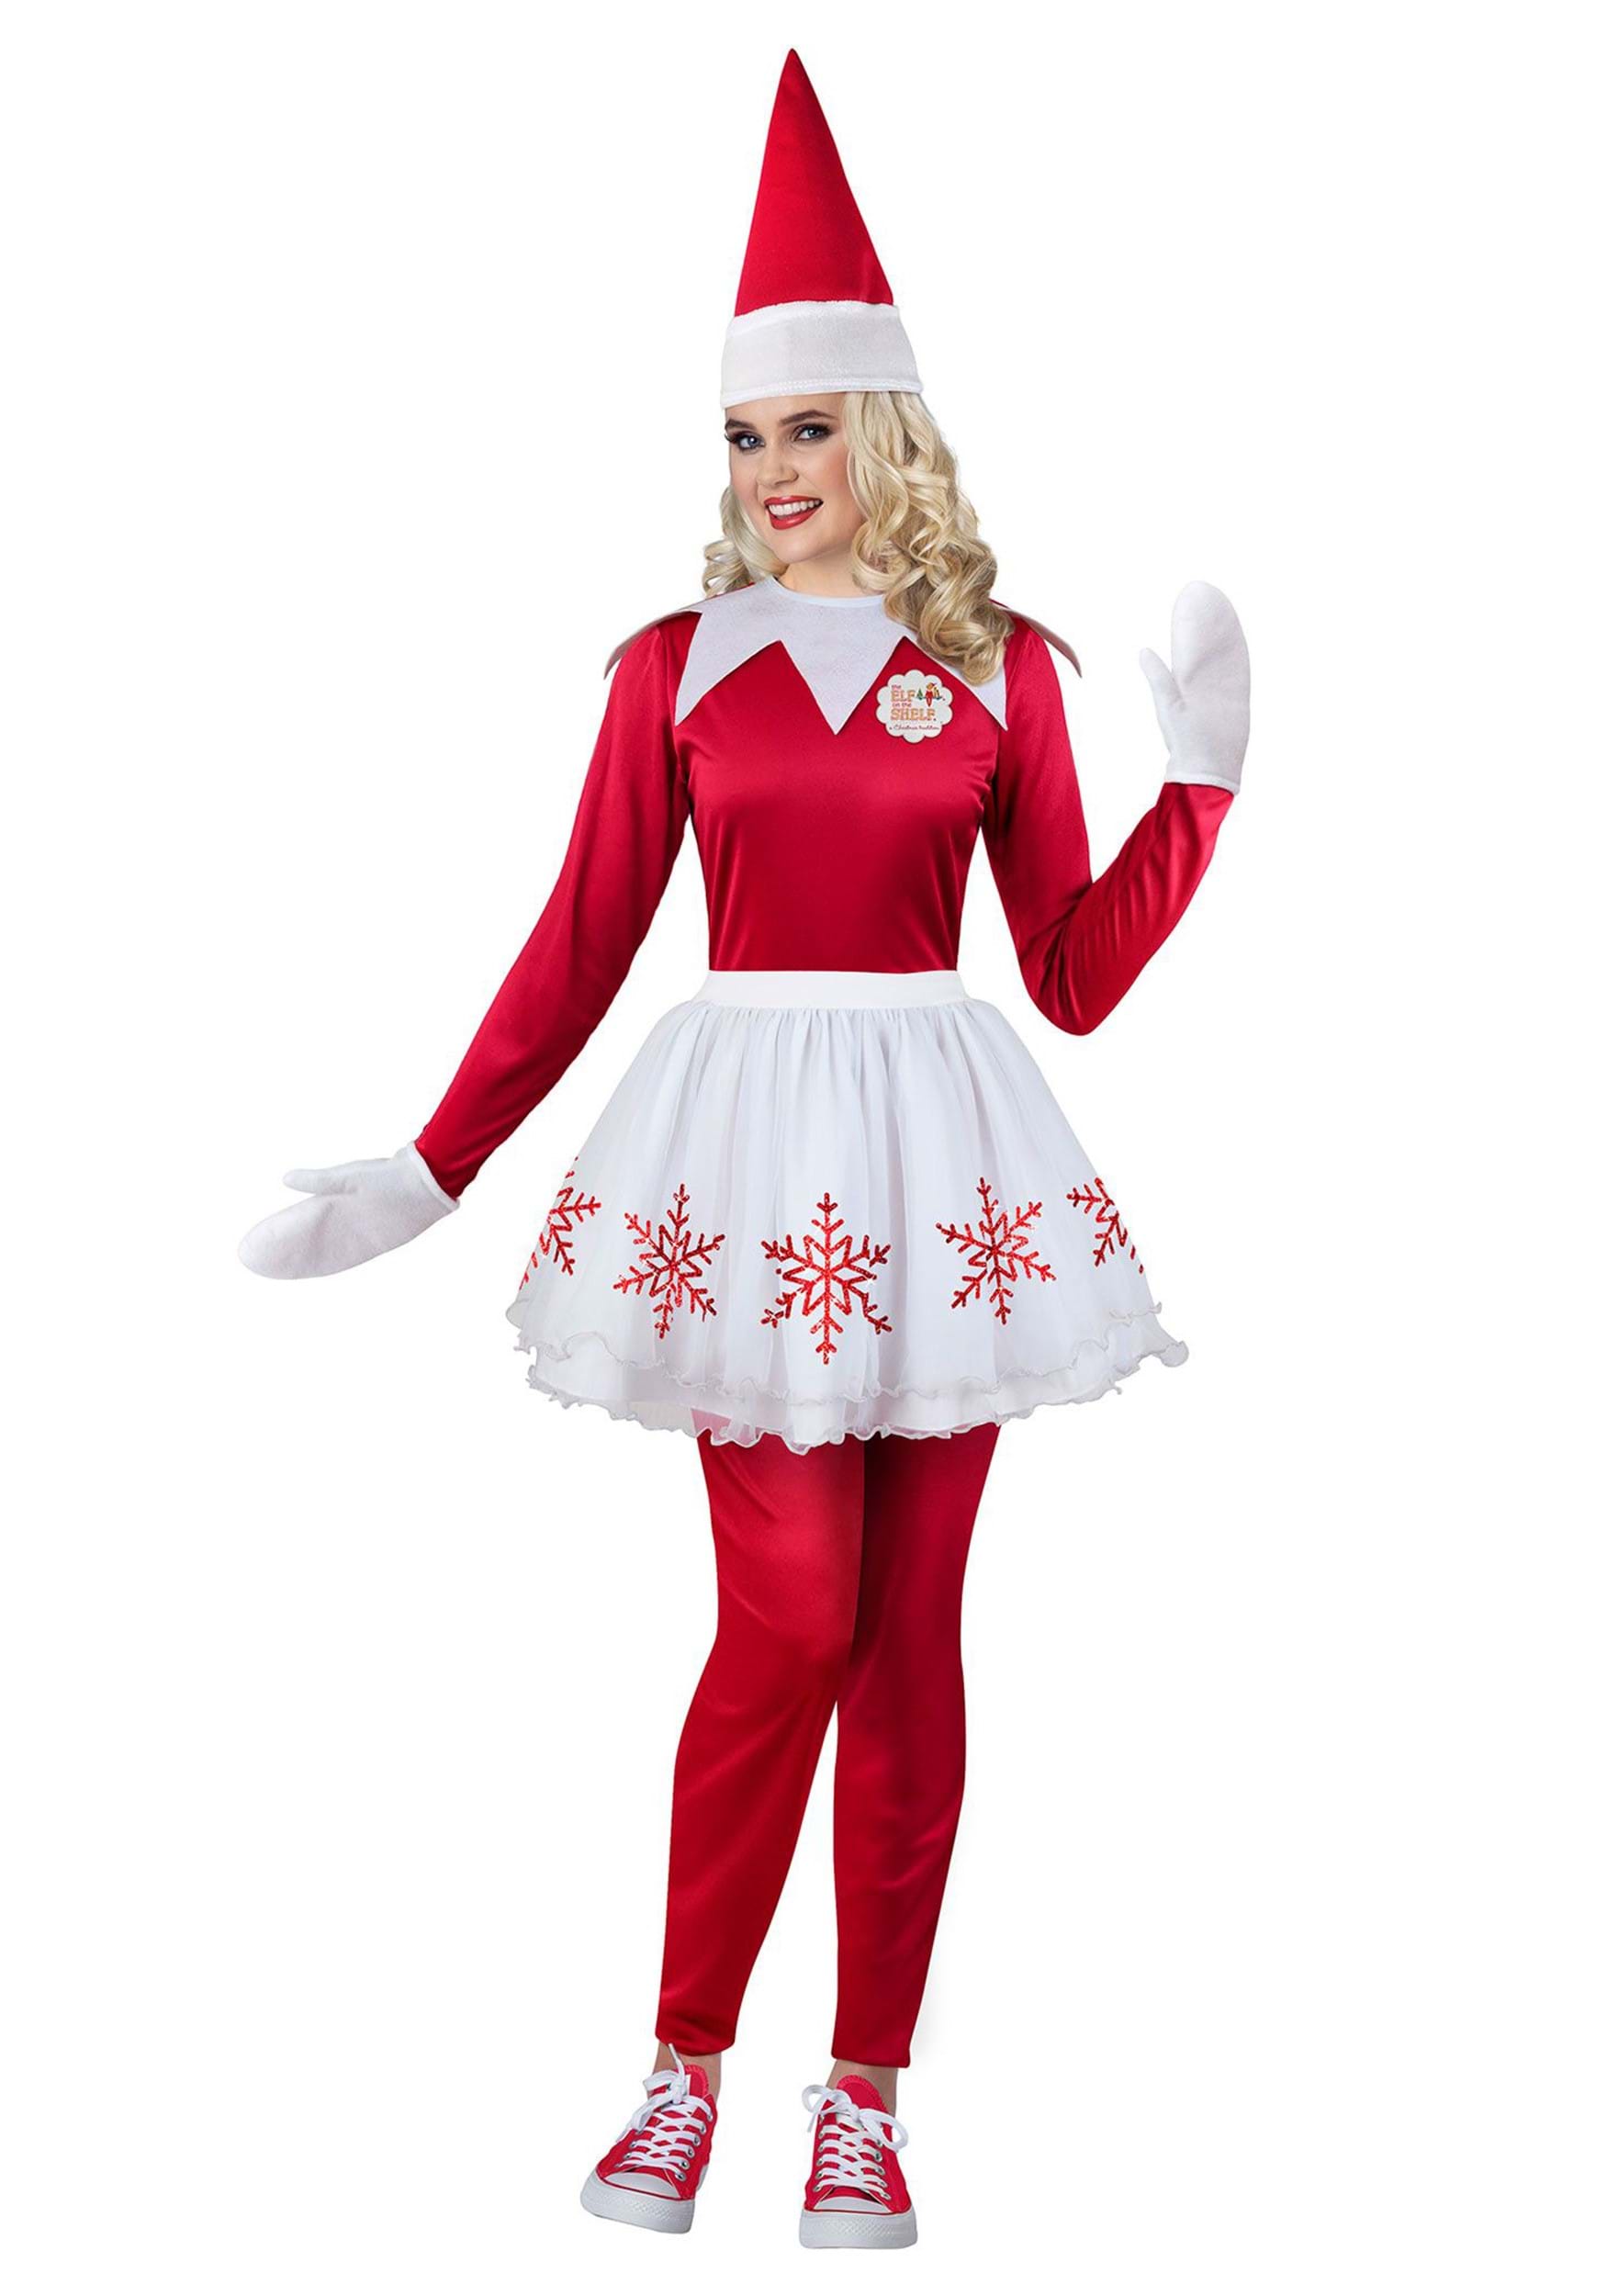 Photos - Fancy Dress ELF Fun World  on the Shelf Costume for Women Red/White FU7991 